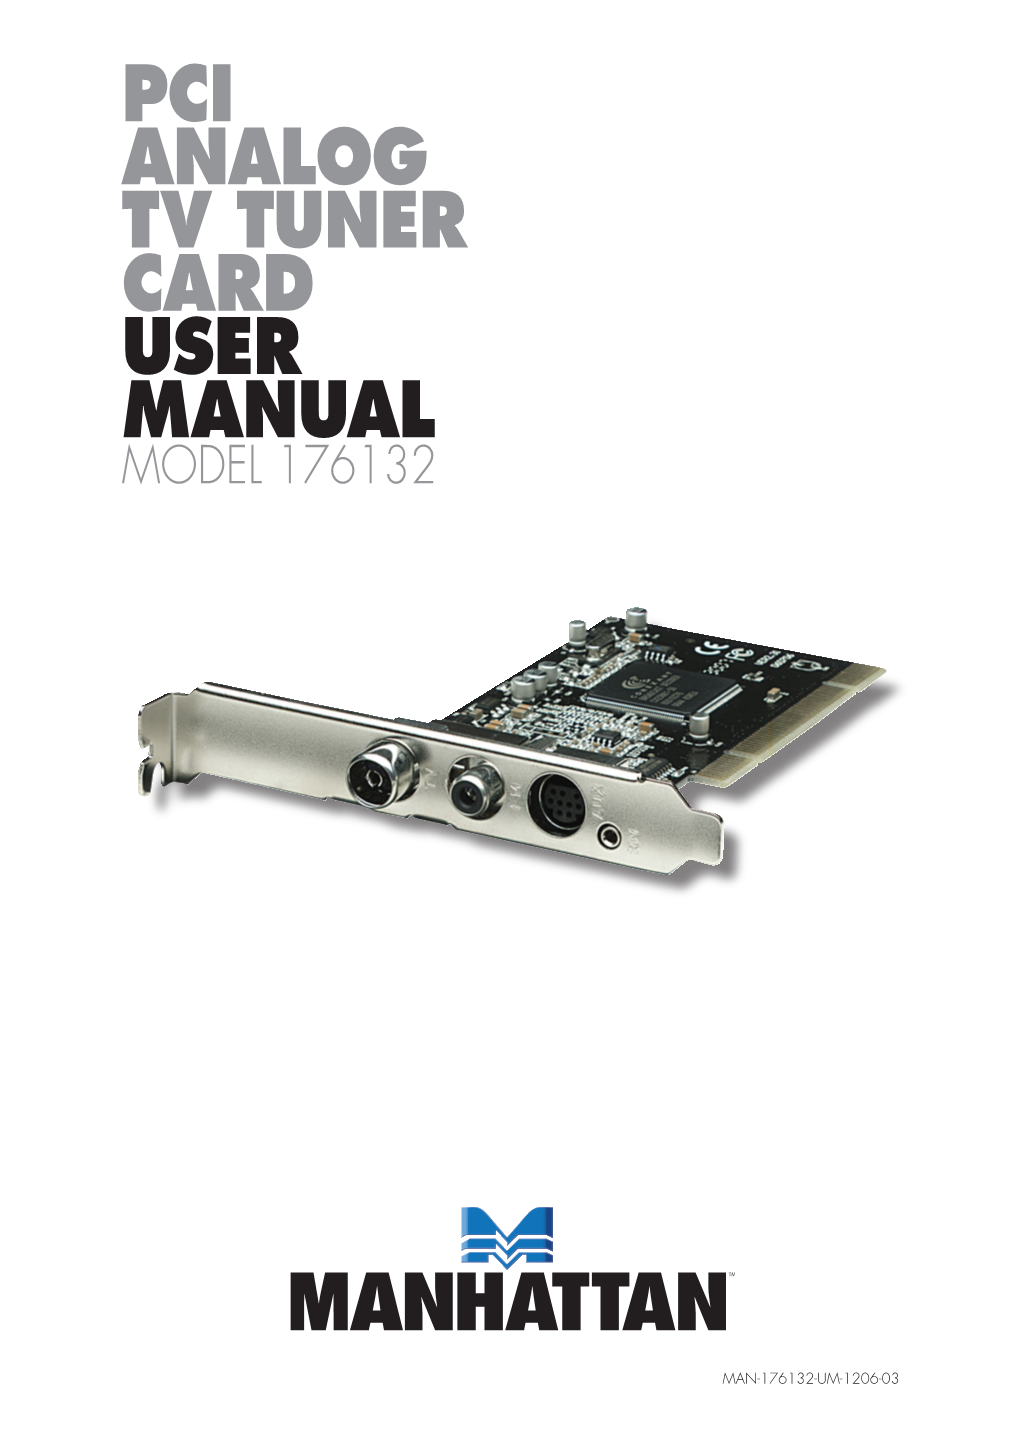 PCI Analog TV Tuner Card User Manual Model 176132